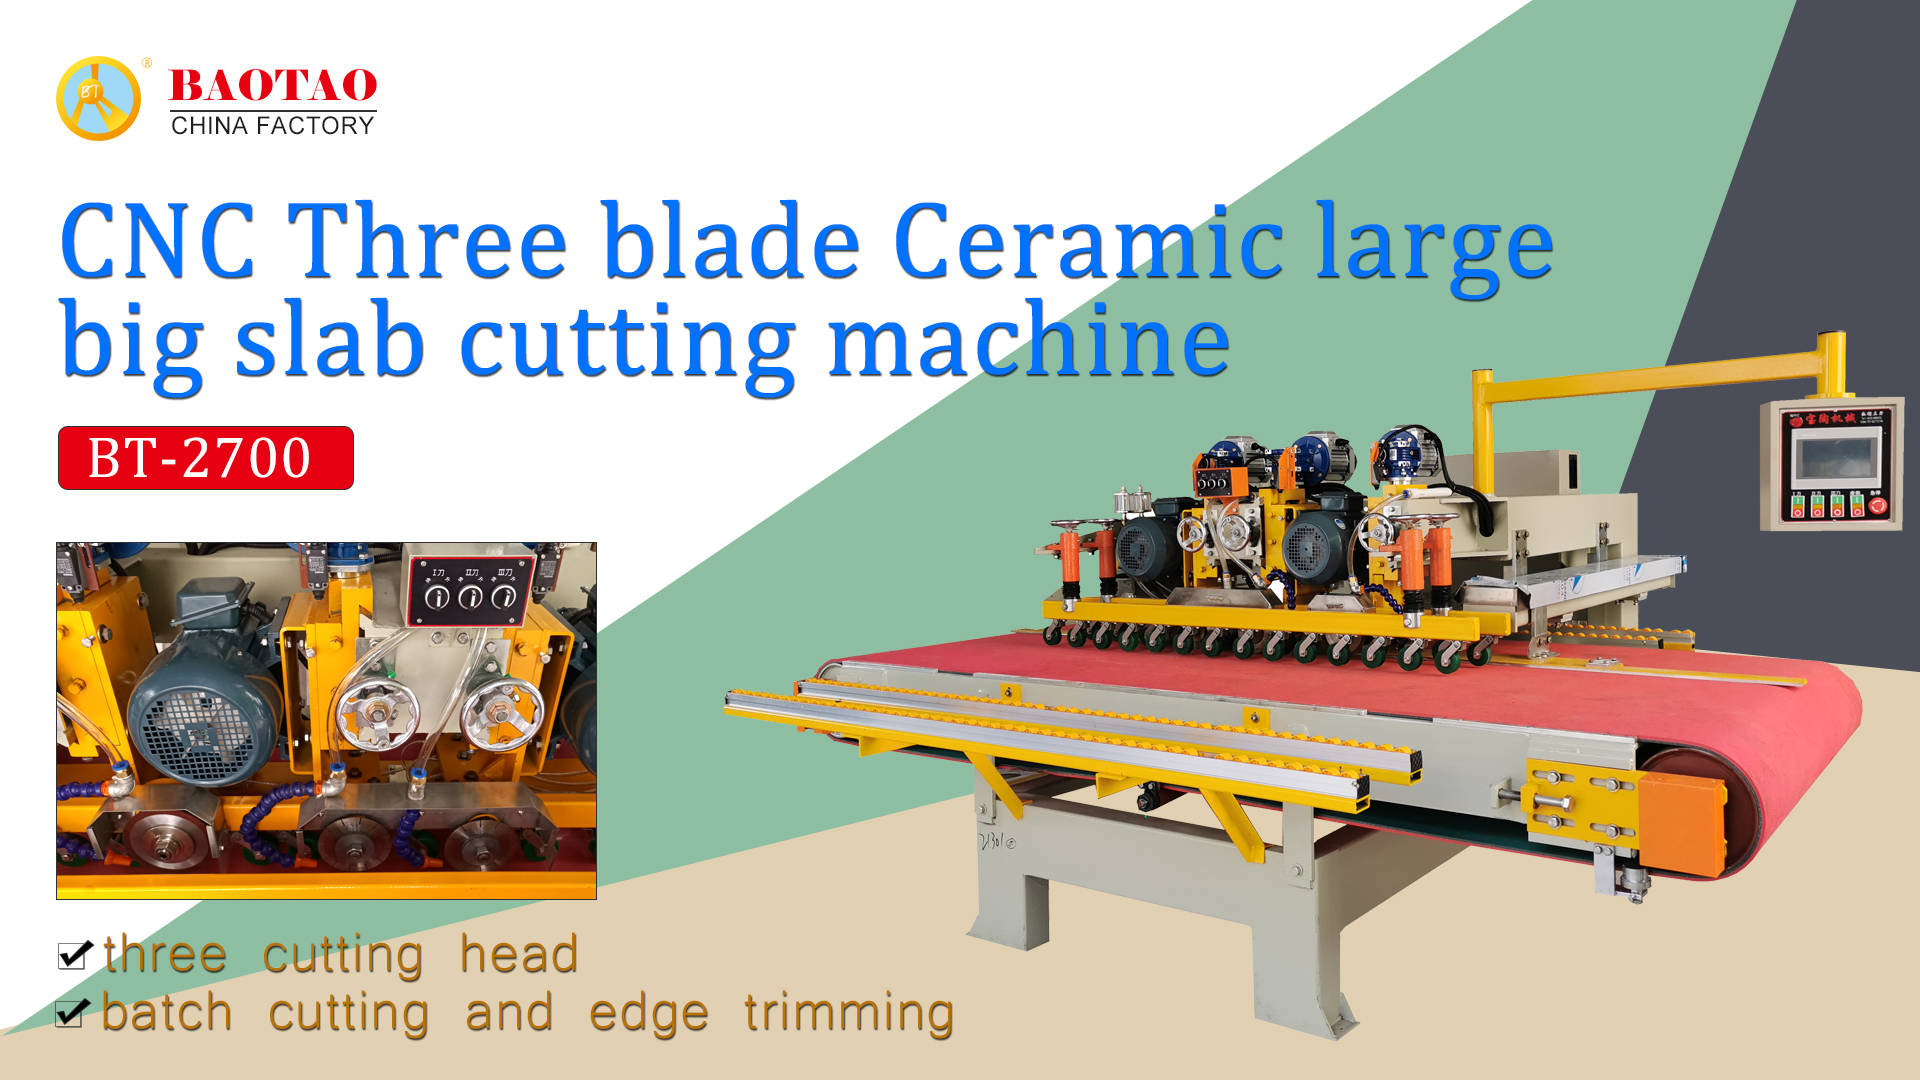 2700 CNC Three blade Ceramic large big slab cutting machine